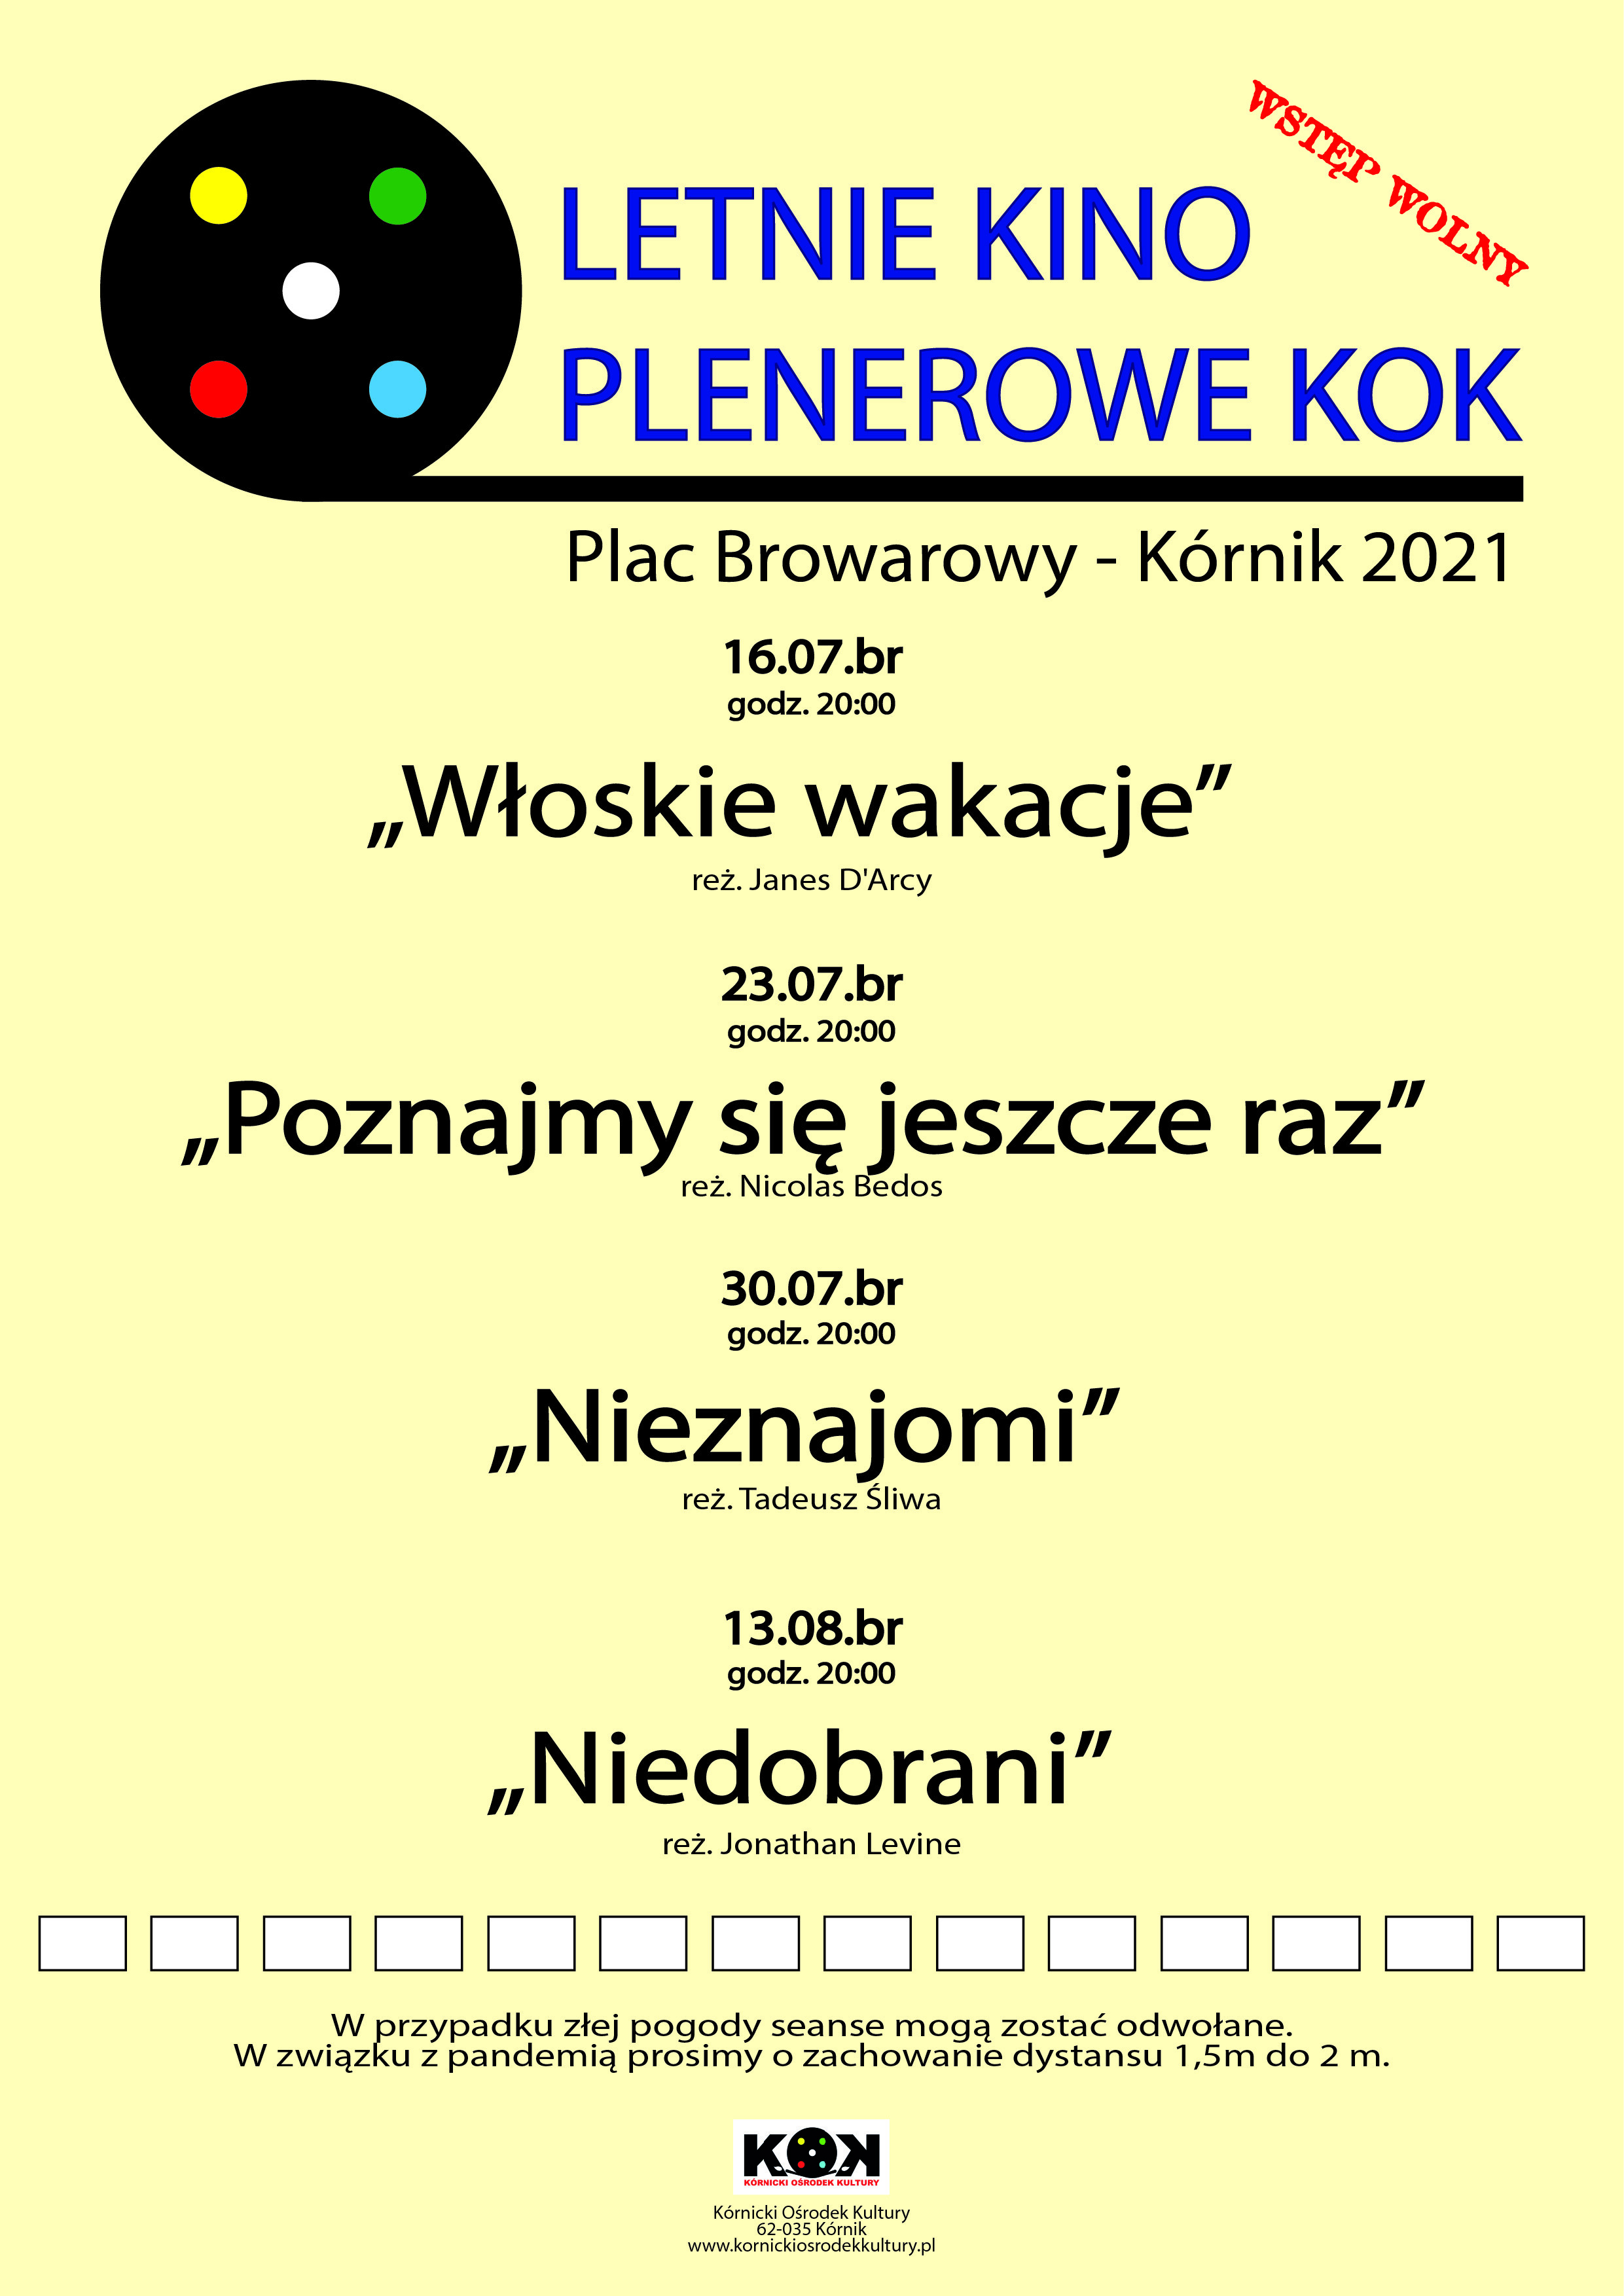 Letnie Kino Plenerowe KOK 2021